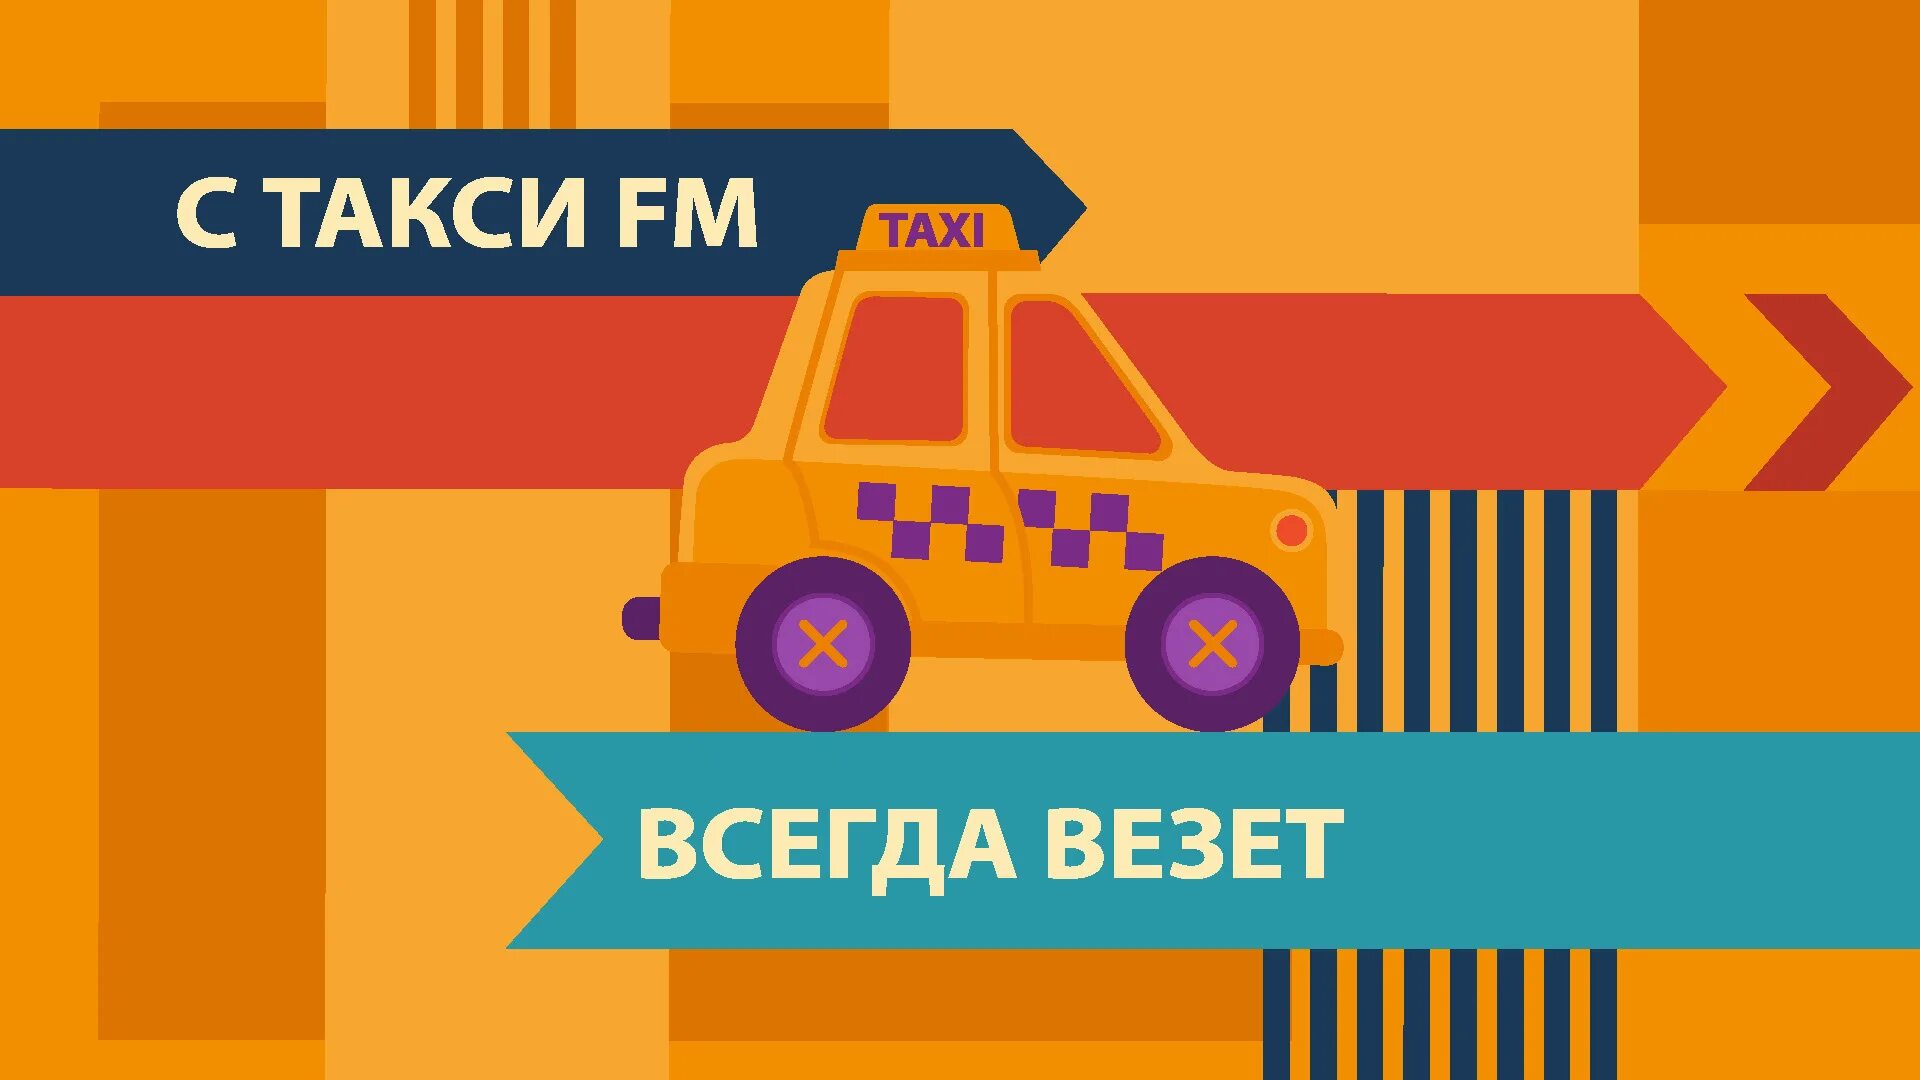 Радио такси москва. Такси fm. Радио такси fm. Такси ФМ логотип. Такси ФМ Саратов.